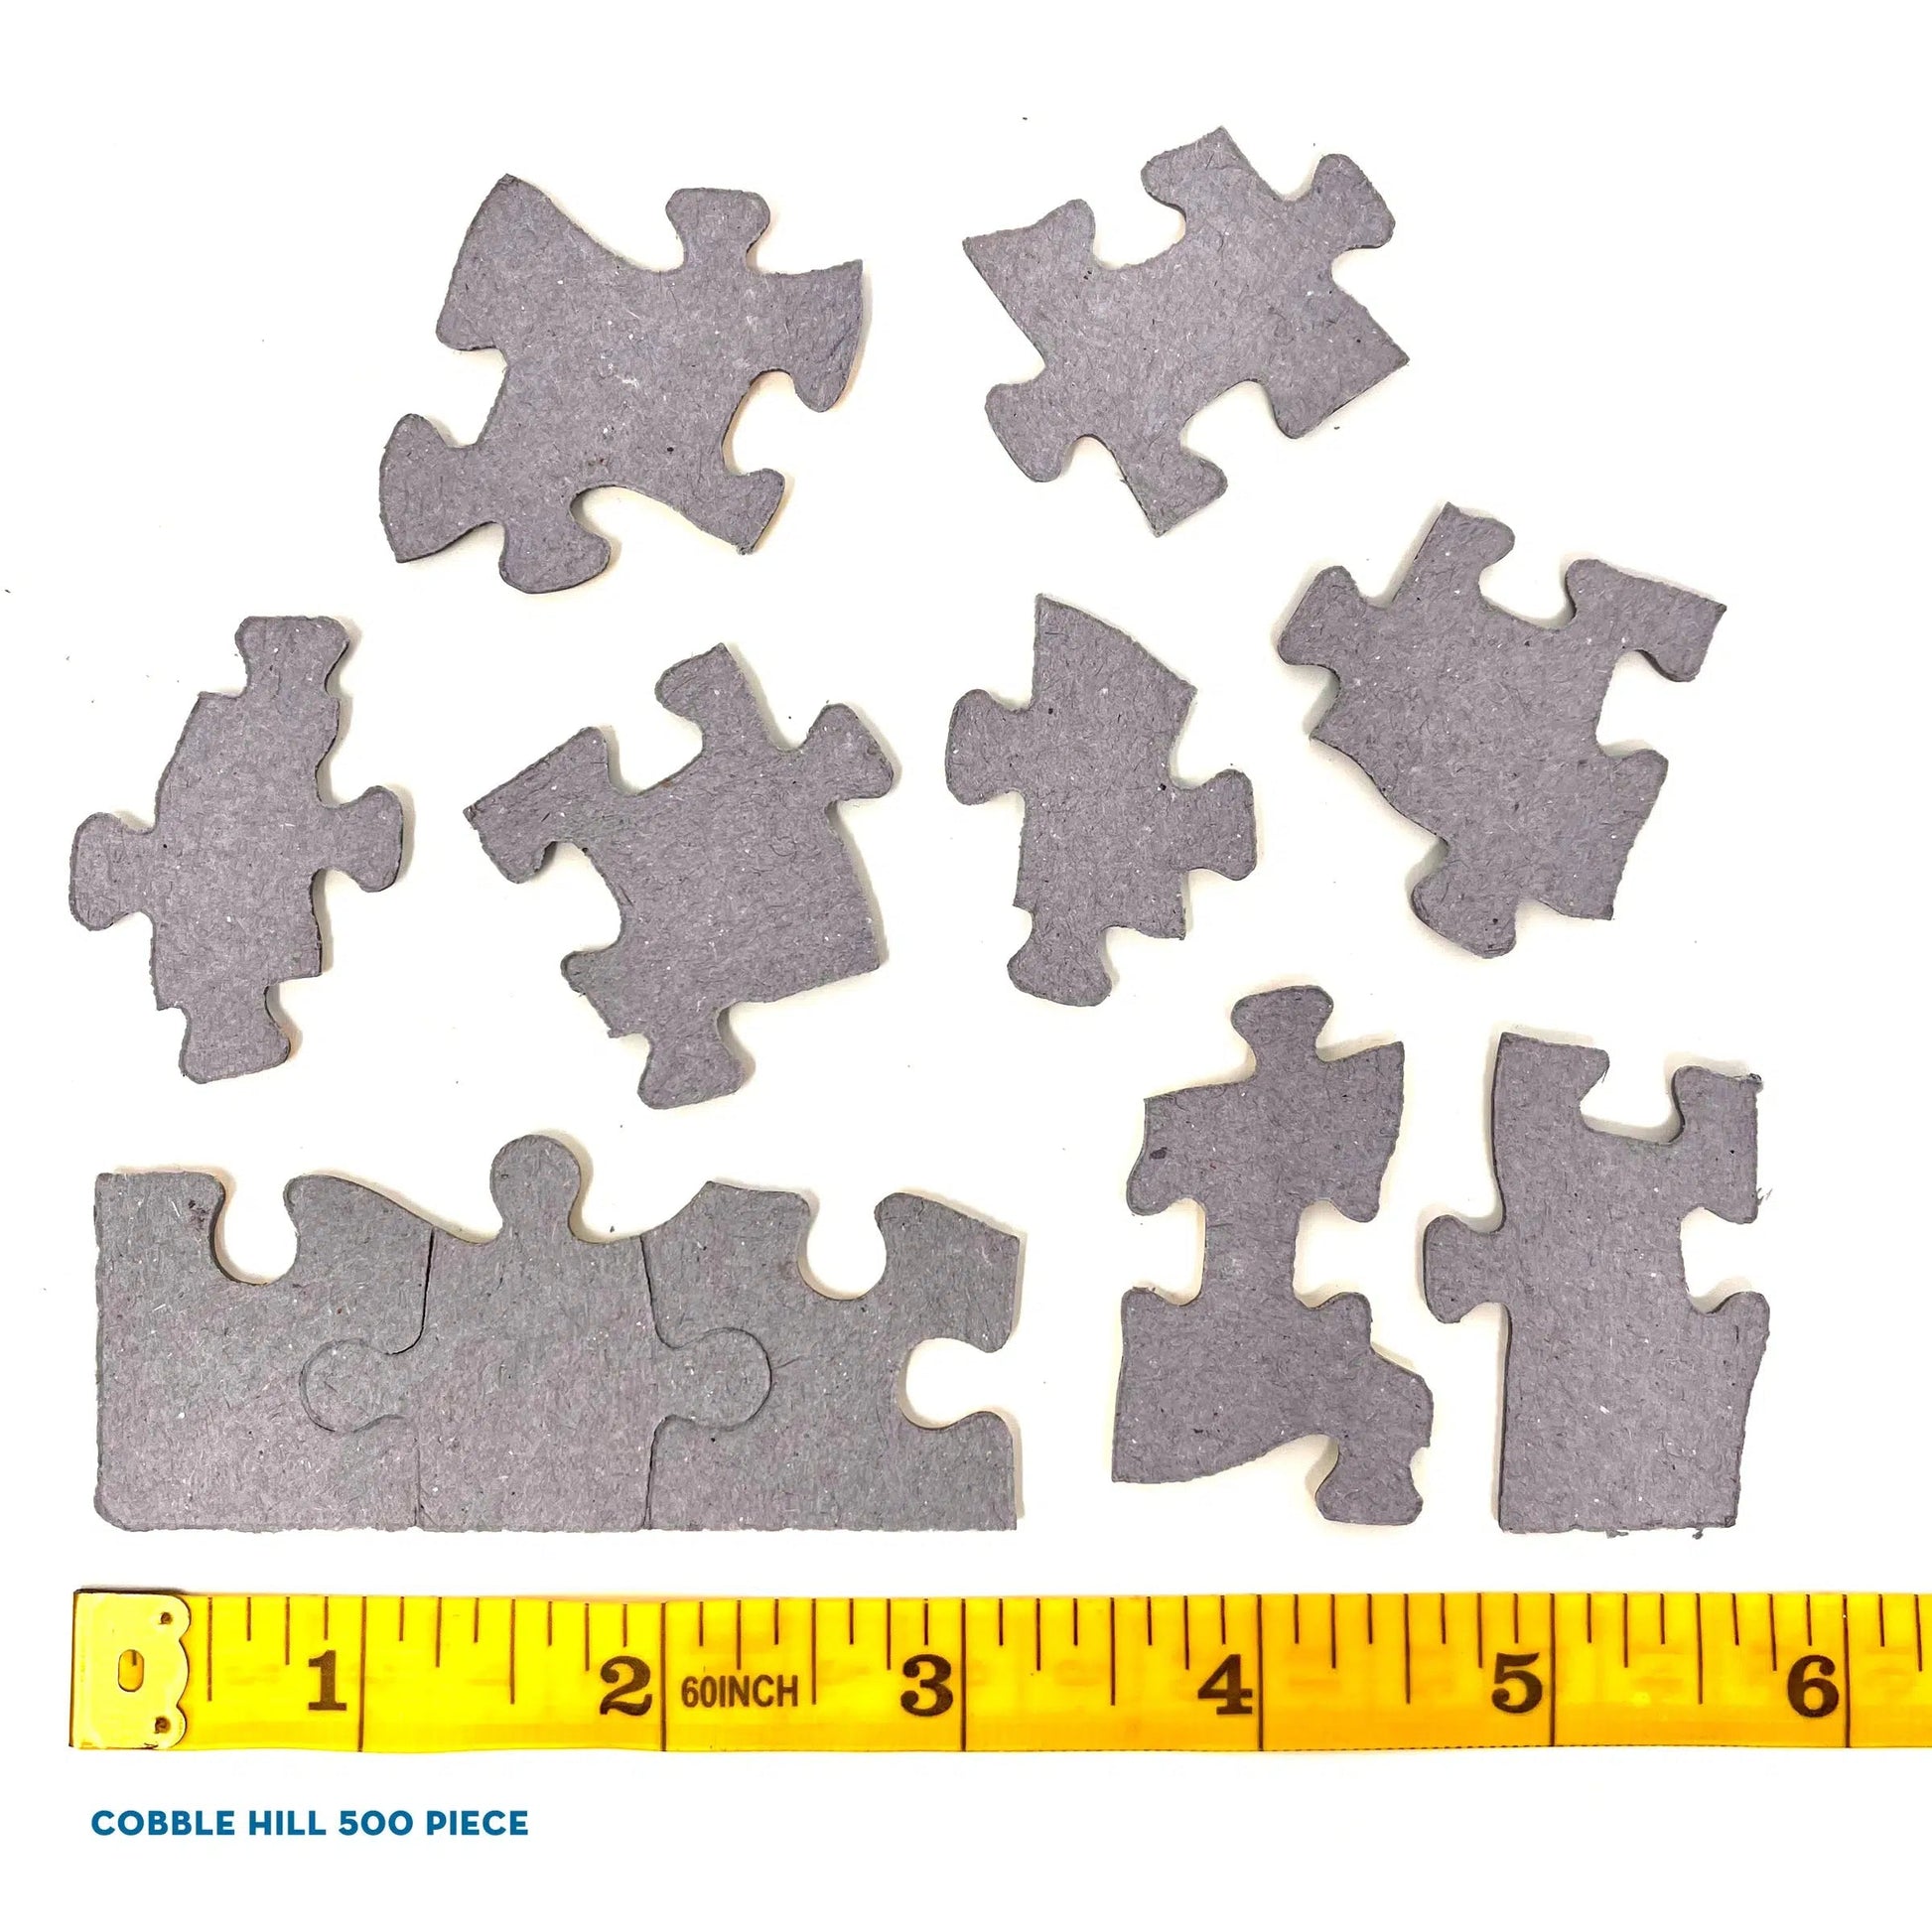 Sagittarius 500 Piece Jigsaw Puzzle Cobble Hill